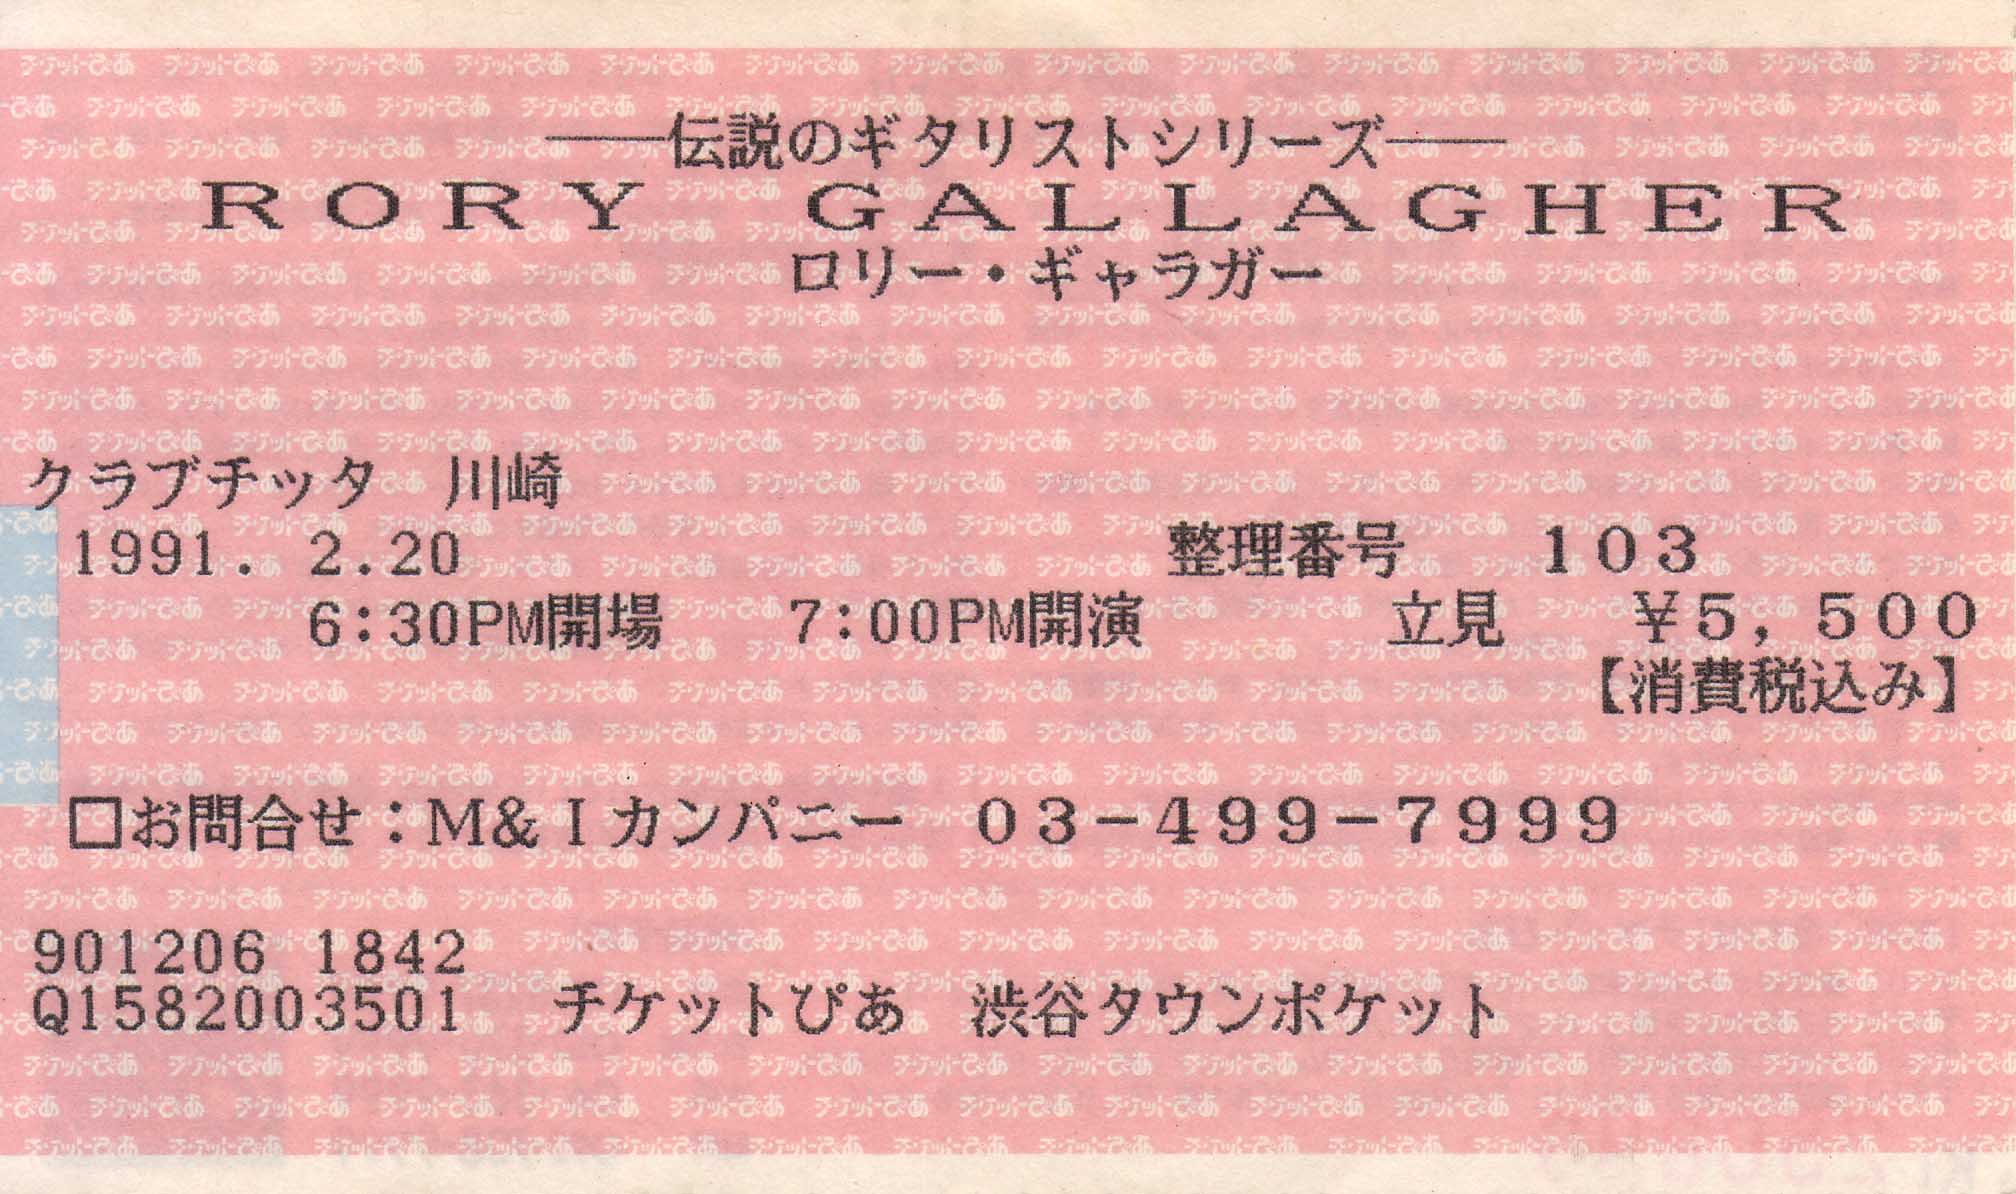 RoryGallagher1991-02-20ClubCittaKawasakiJapan (4).jpg